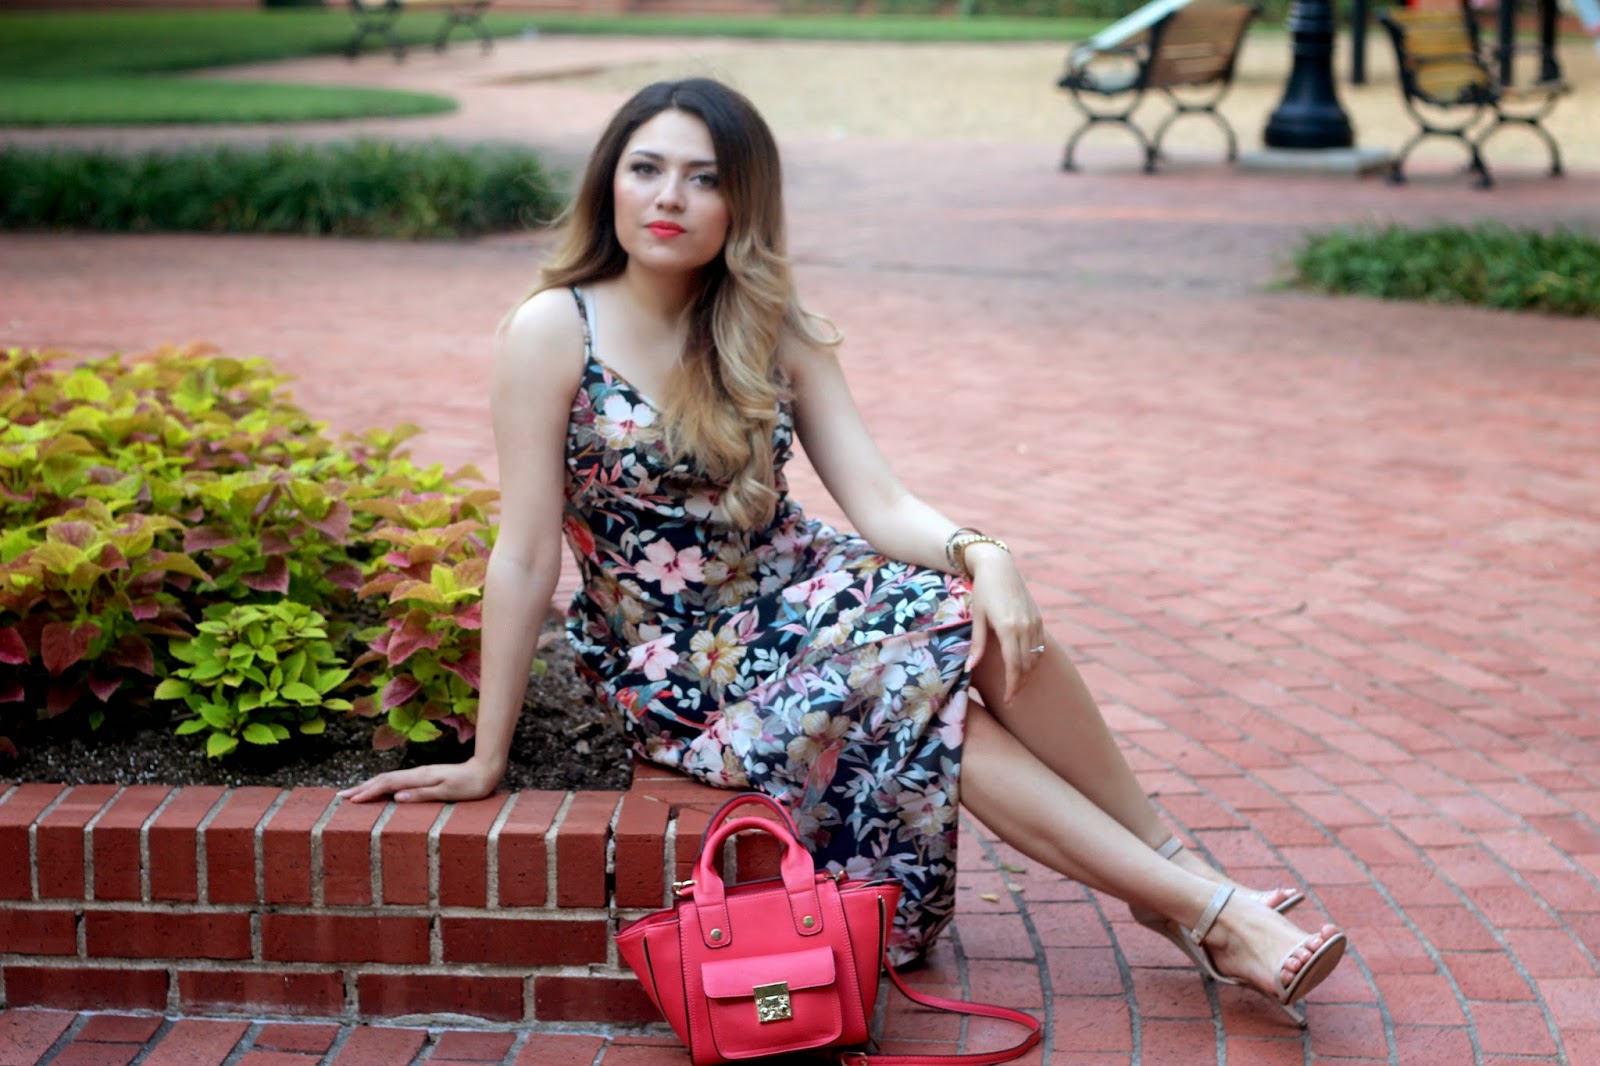 Floral Maxi | Ashley Meza | Dallas Fashion Blog